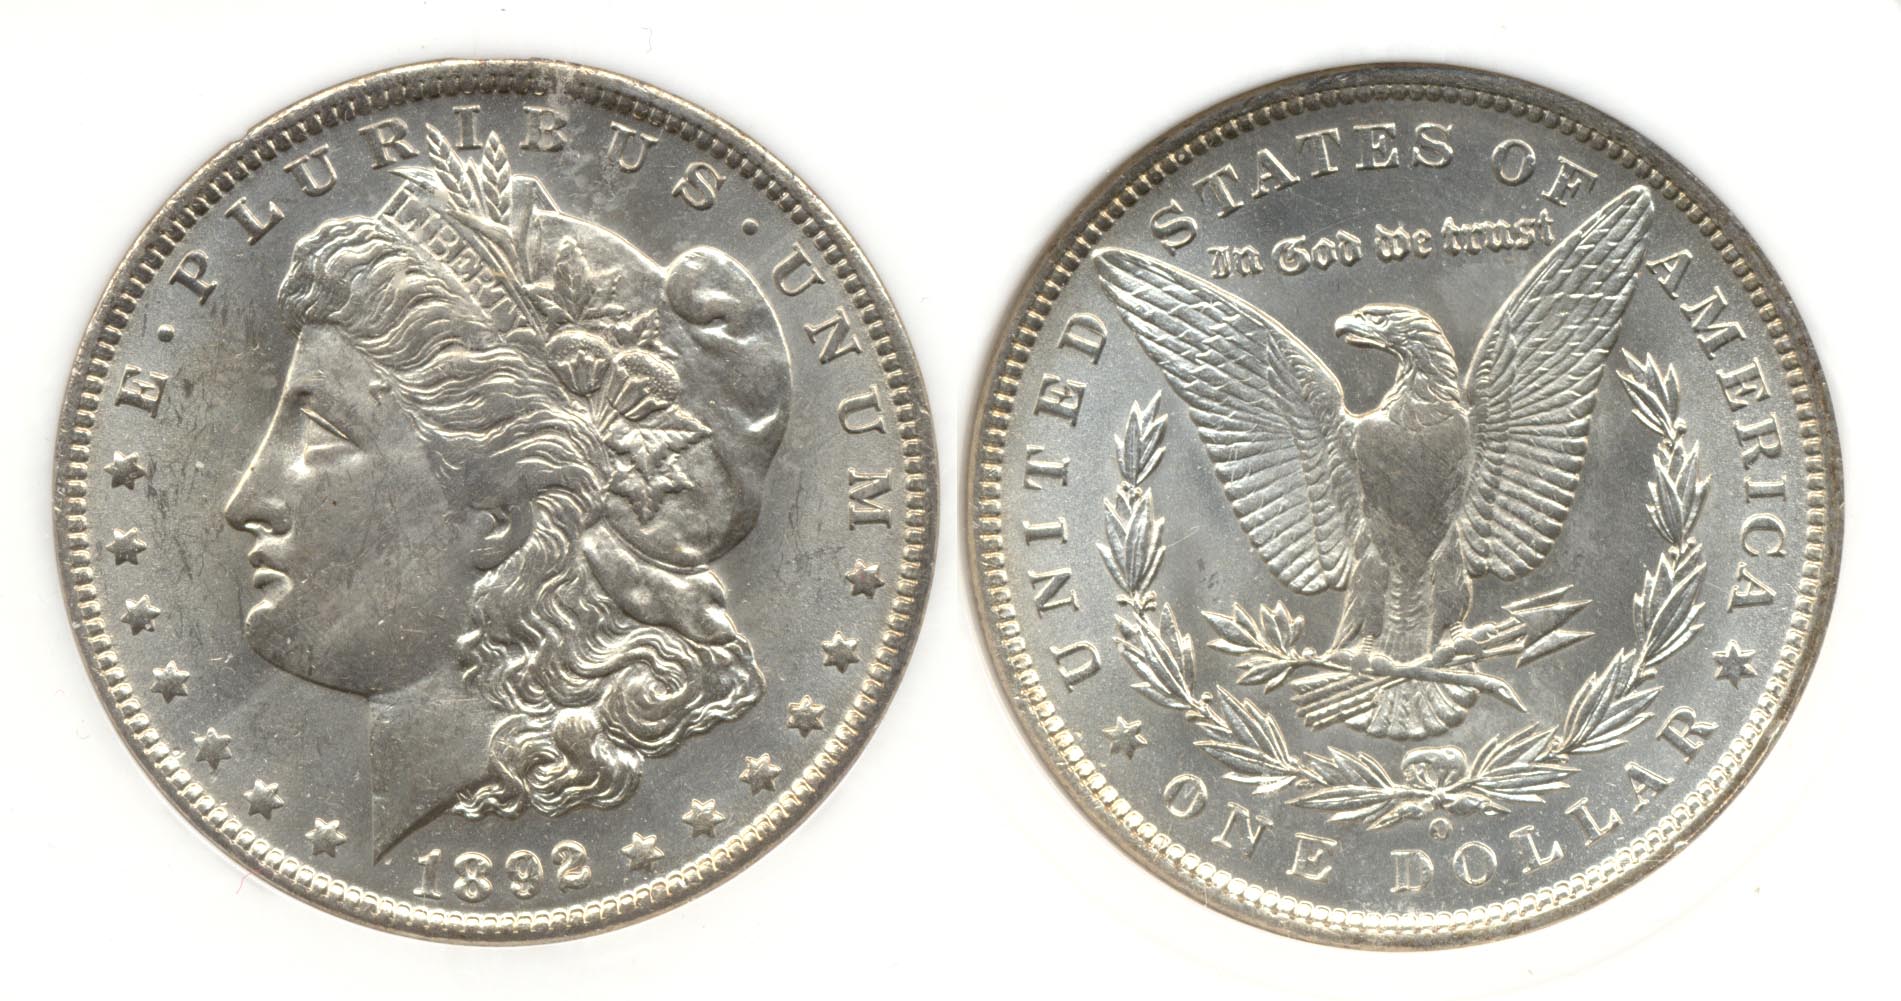 1892-O Morgan Silver Dollar PCI MS-62